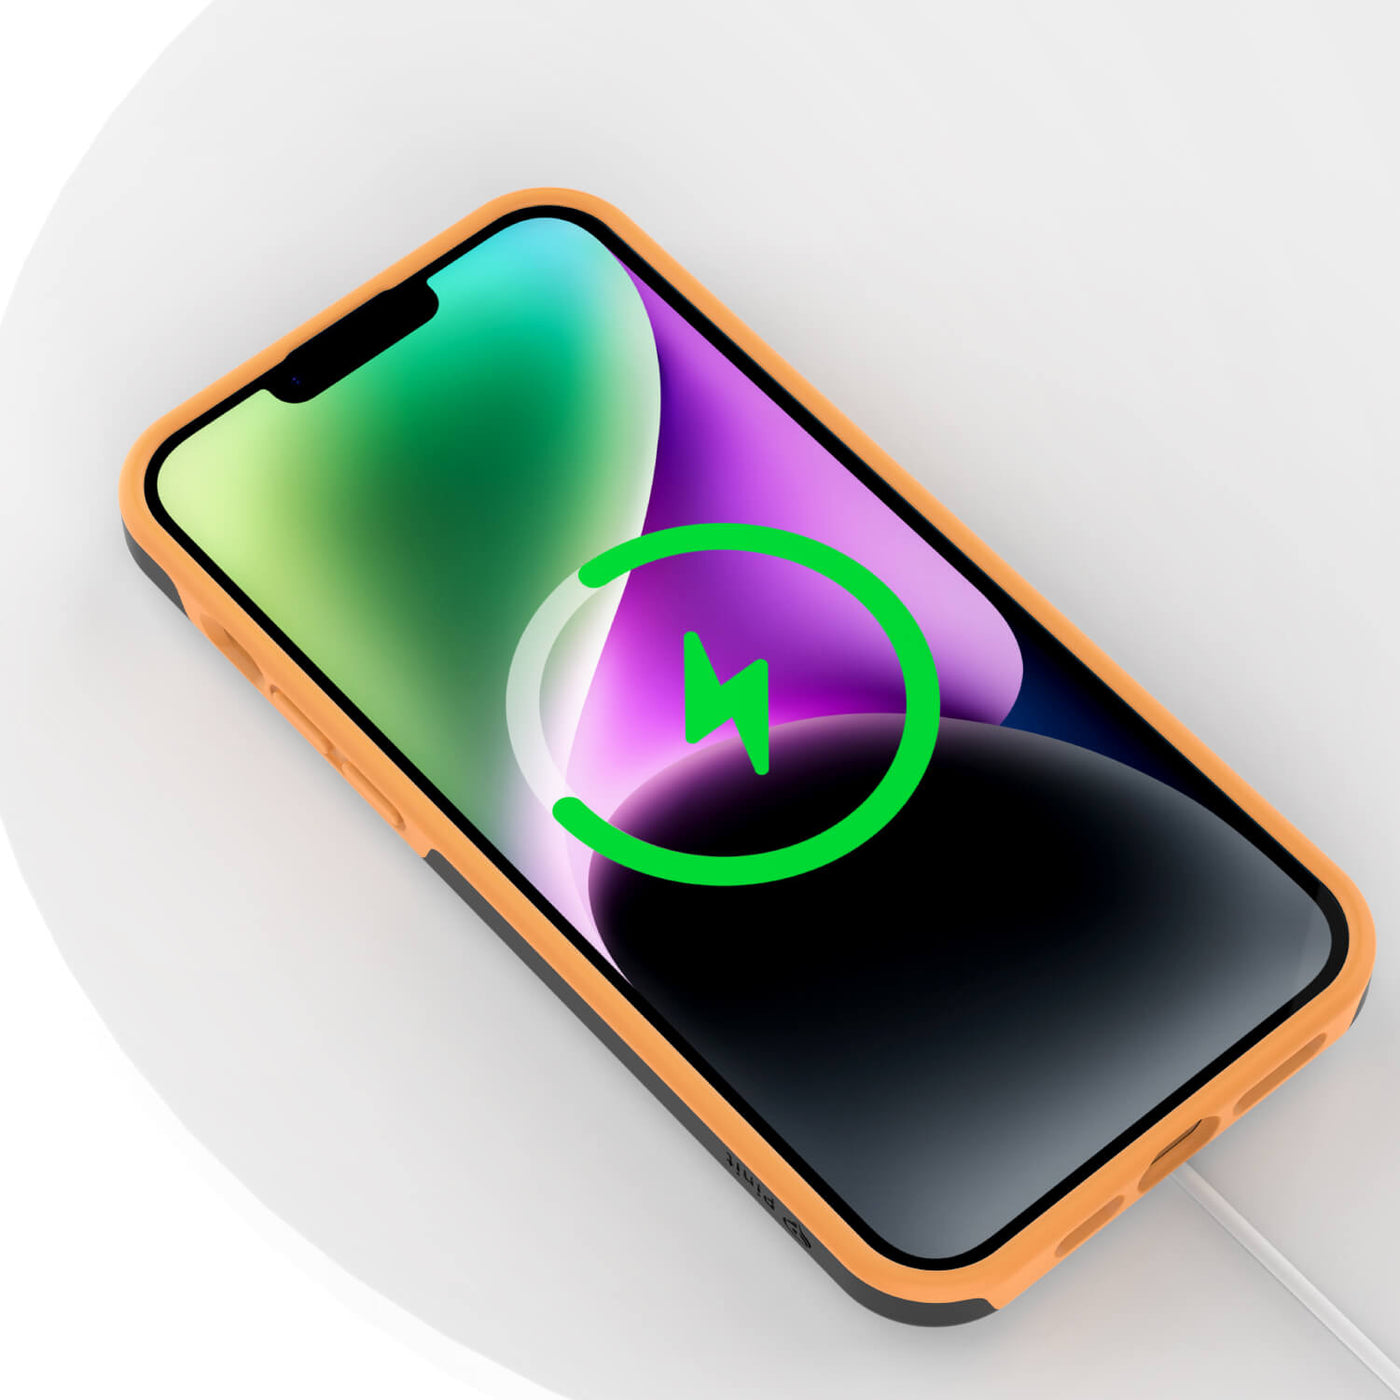 Pinit Dynamic Case for iPhone 14 - Black/Orange